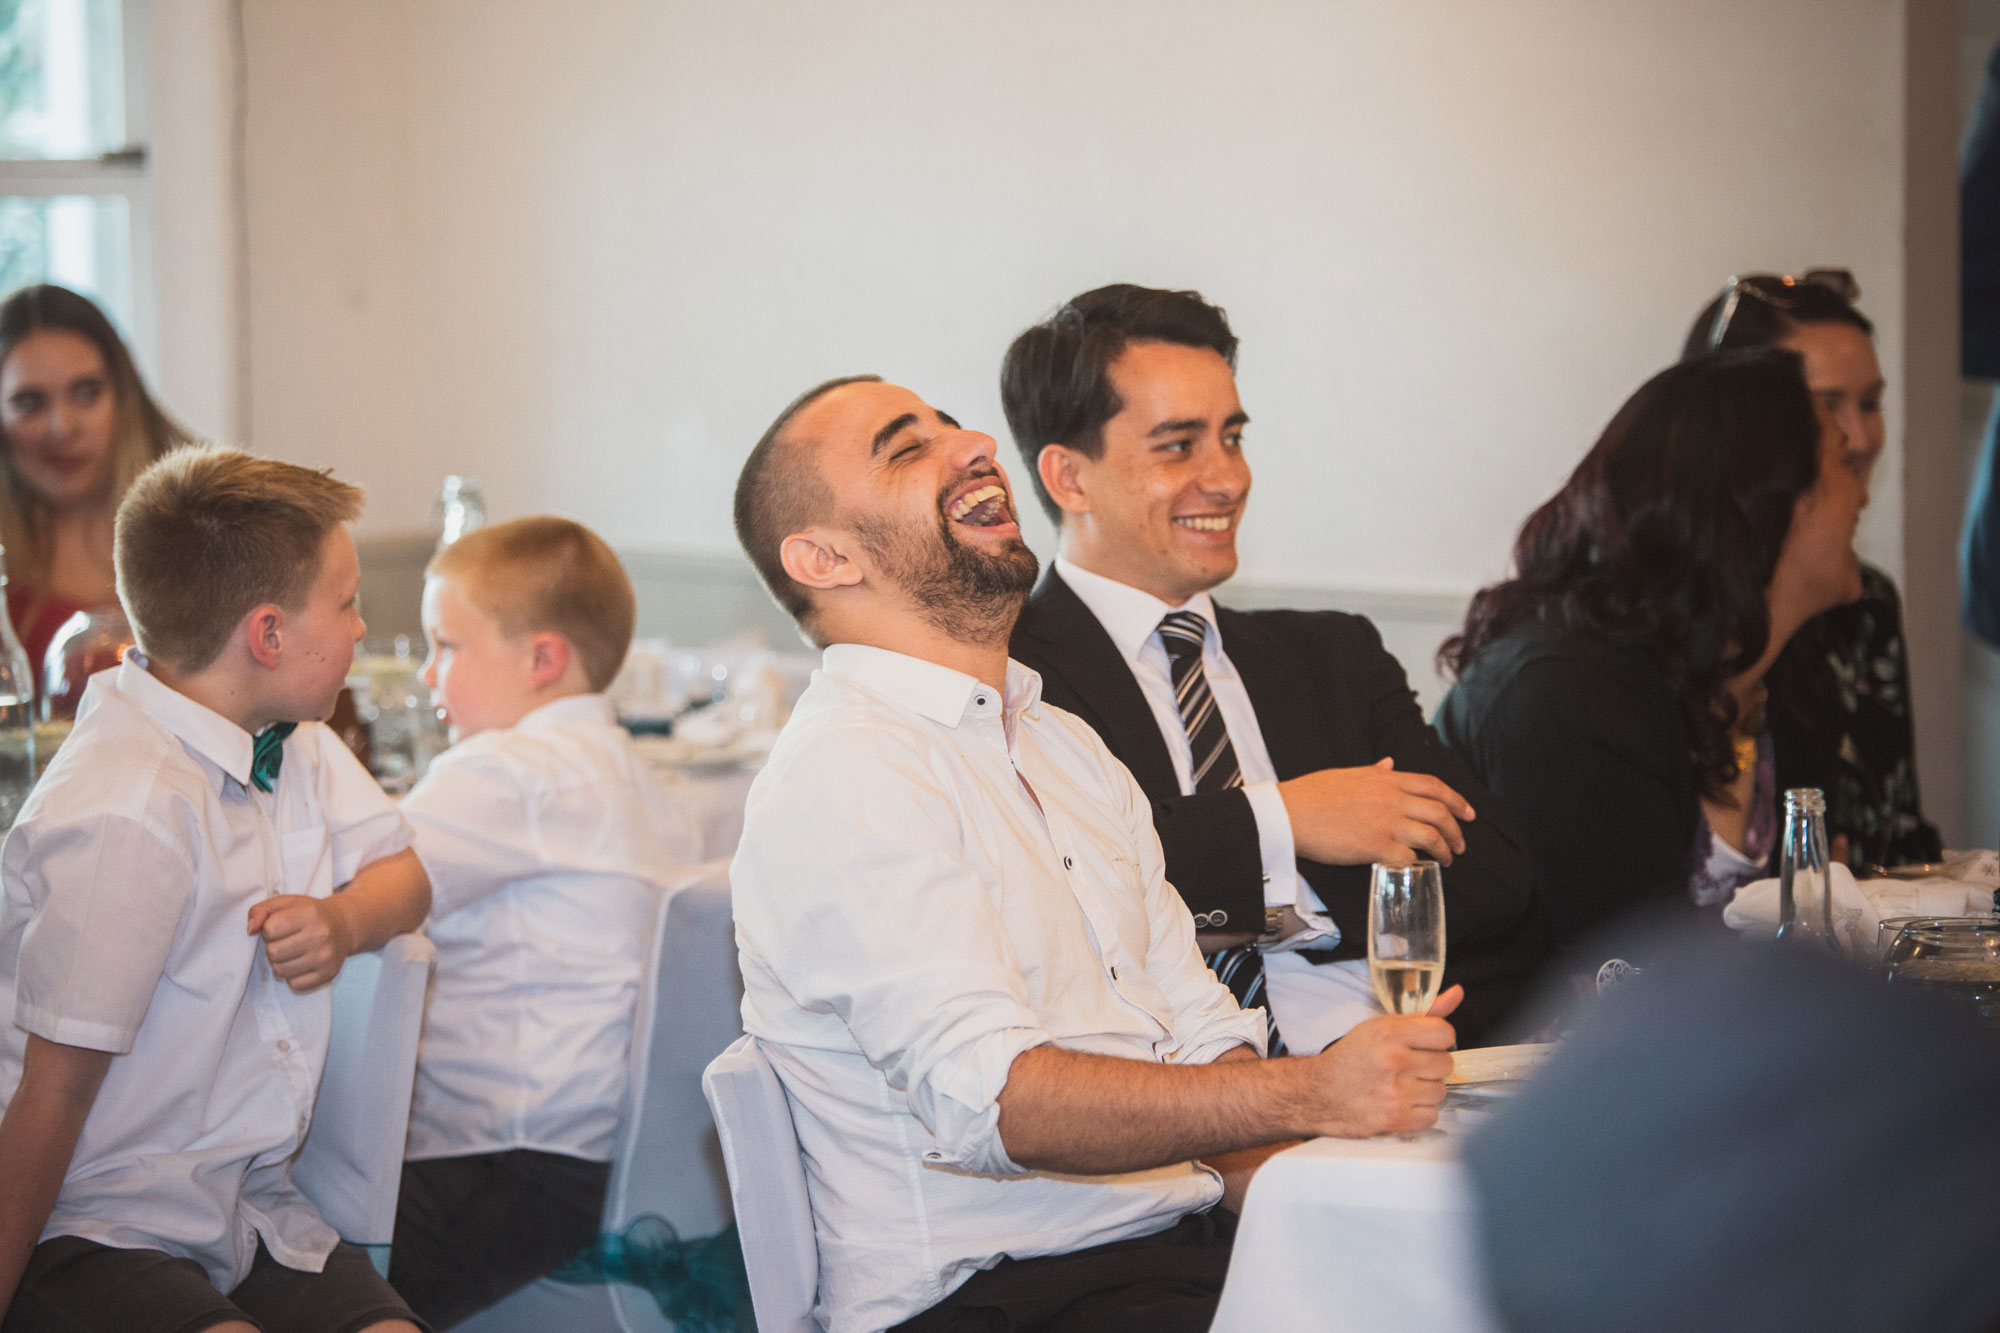 auckland wedding guest having a laugh